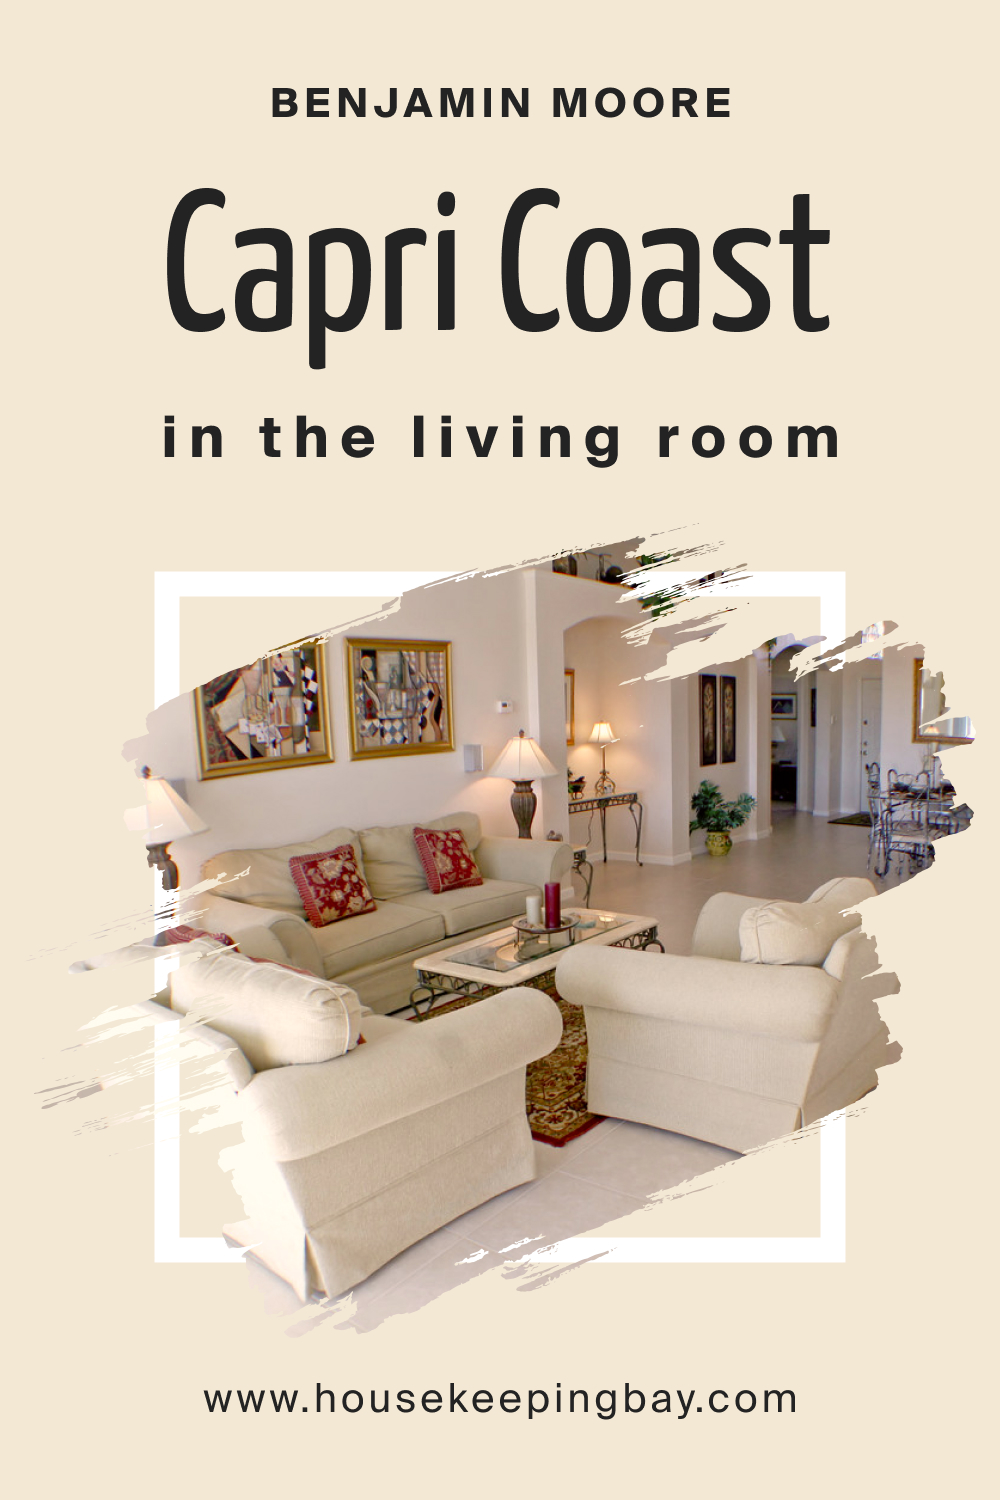 Benjamin Moore. Capri Coast OC 87 in the Living Room